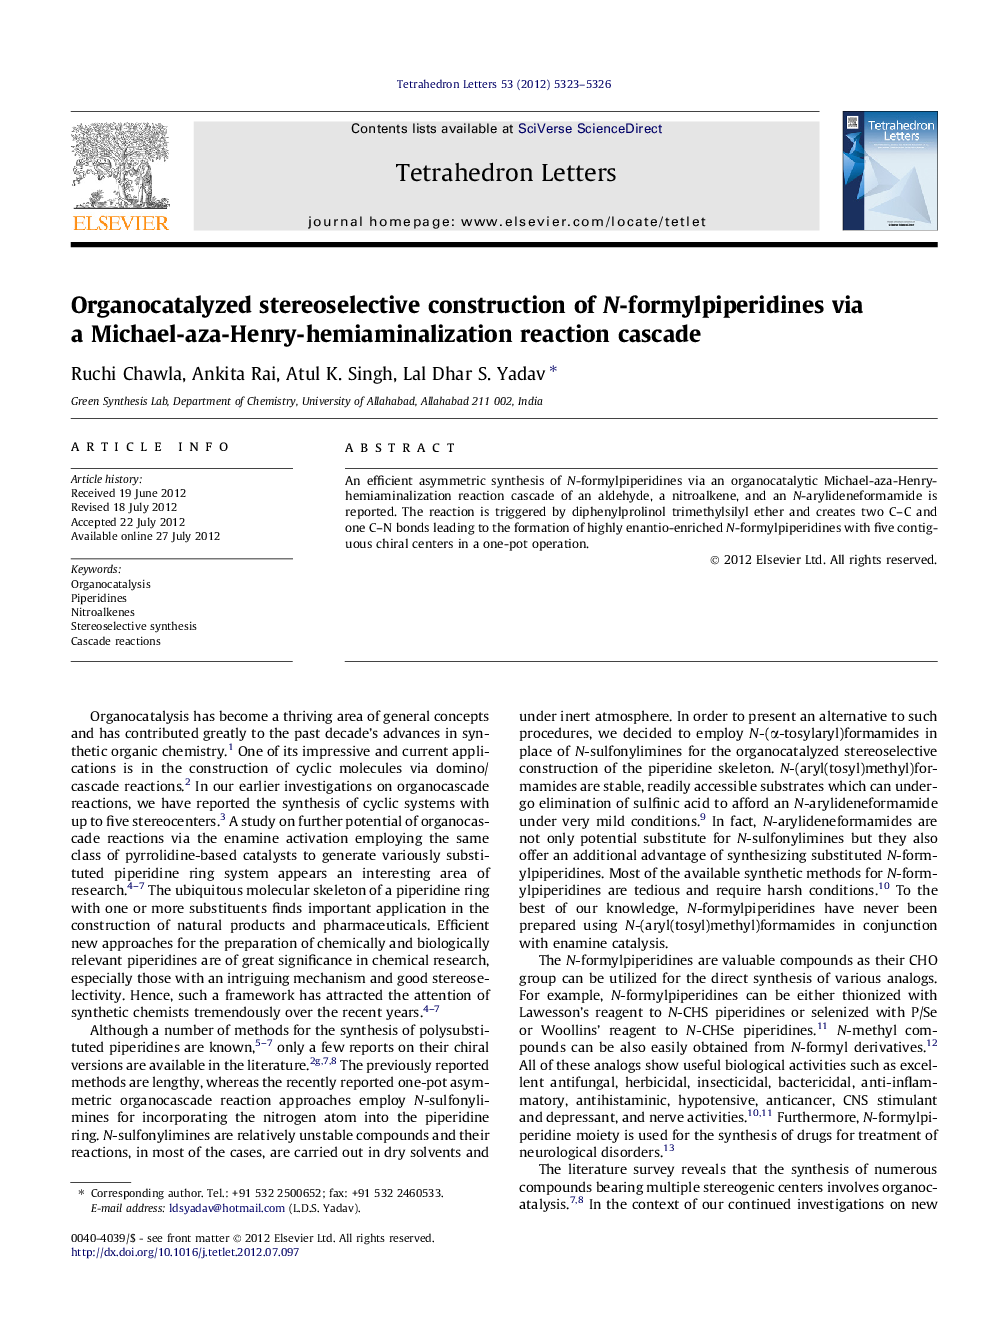 Organocatalyzed stereoselective construction of N-formylpiperidines via a Michael-aza-Henry-hemiaminalization reaction cascade